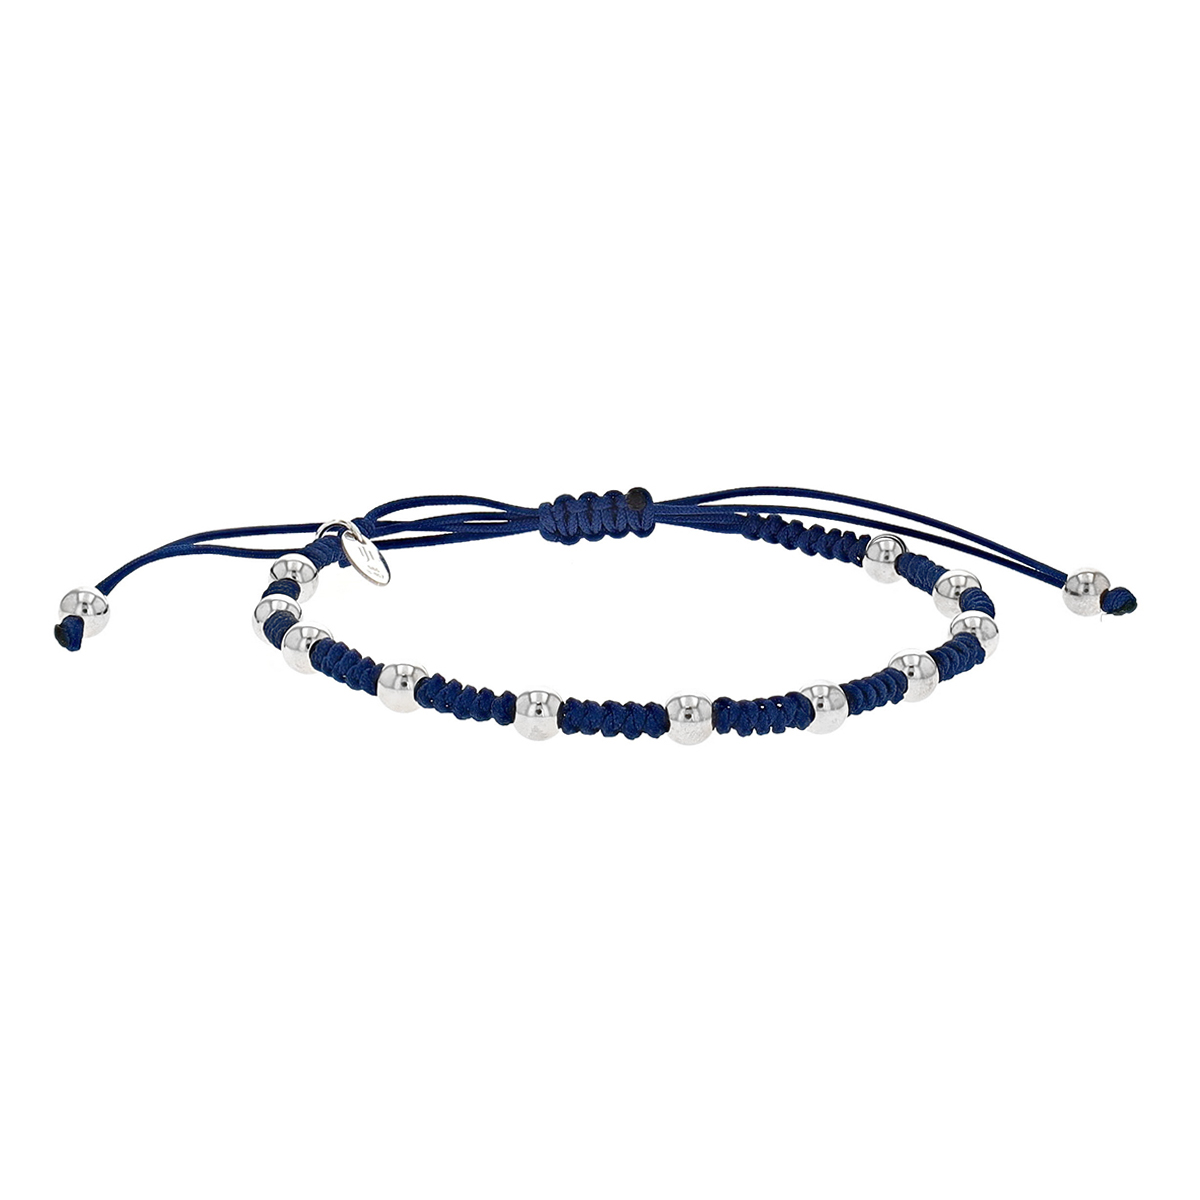 14K White Gold Bead and Blue Rope Bracelet